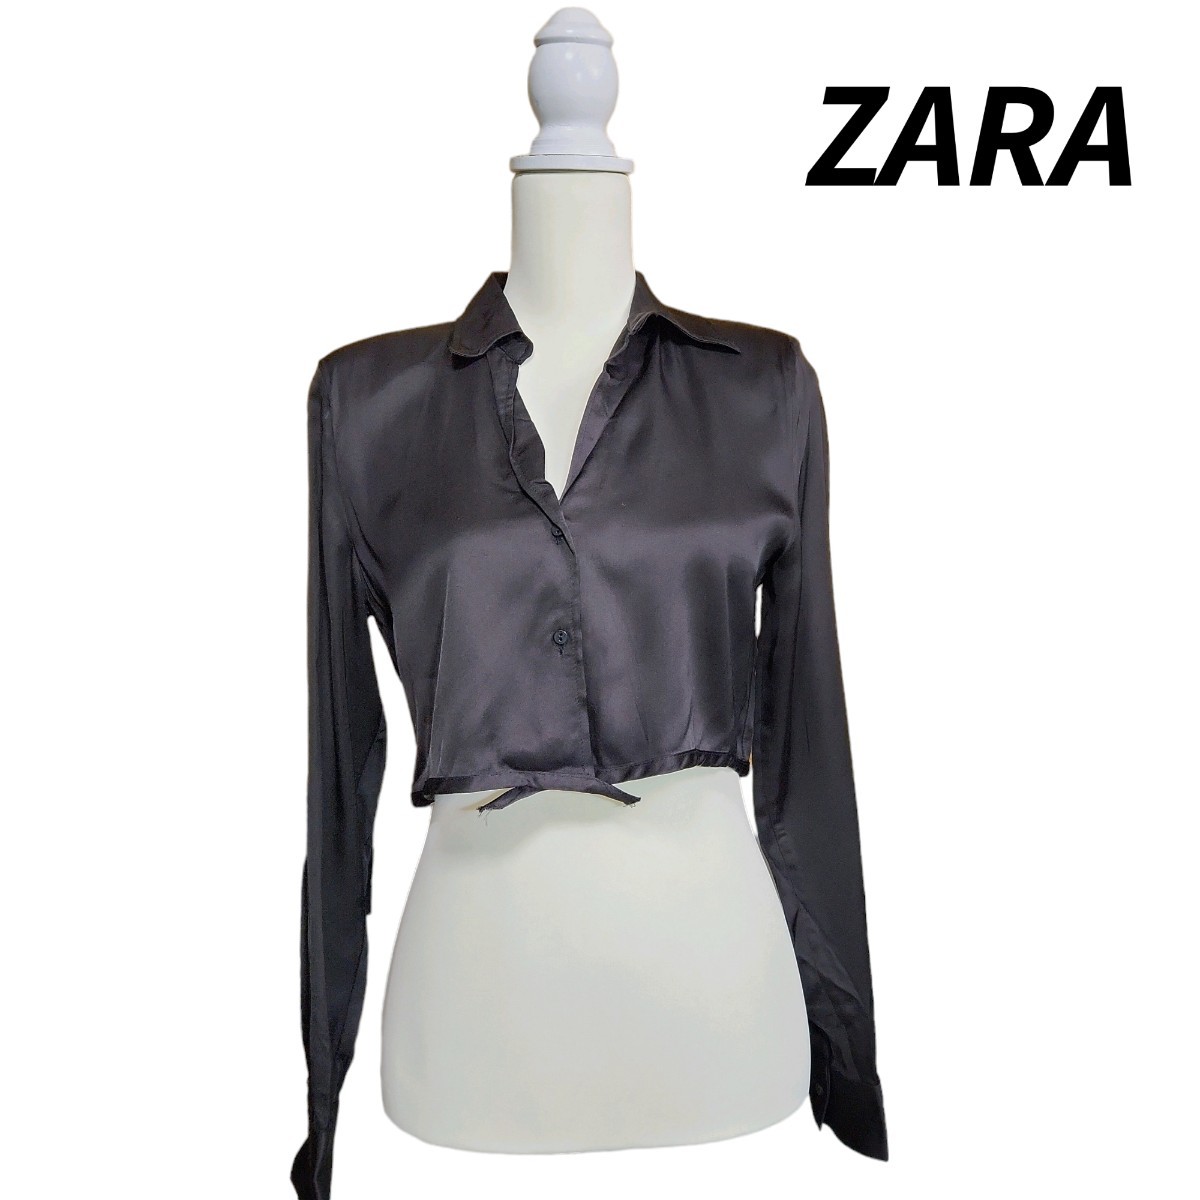 ZARA レーヨン素材 ショート丈オープンカラー長袖シャツ 黒 表記サイズM 肩パットあり82926_画像1